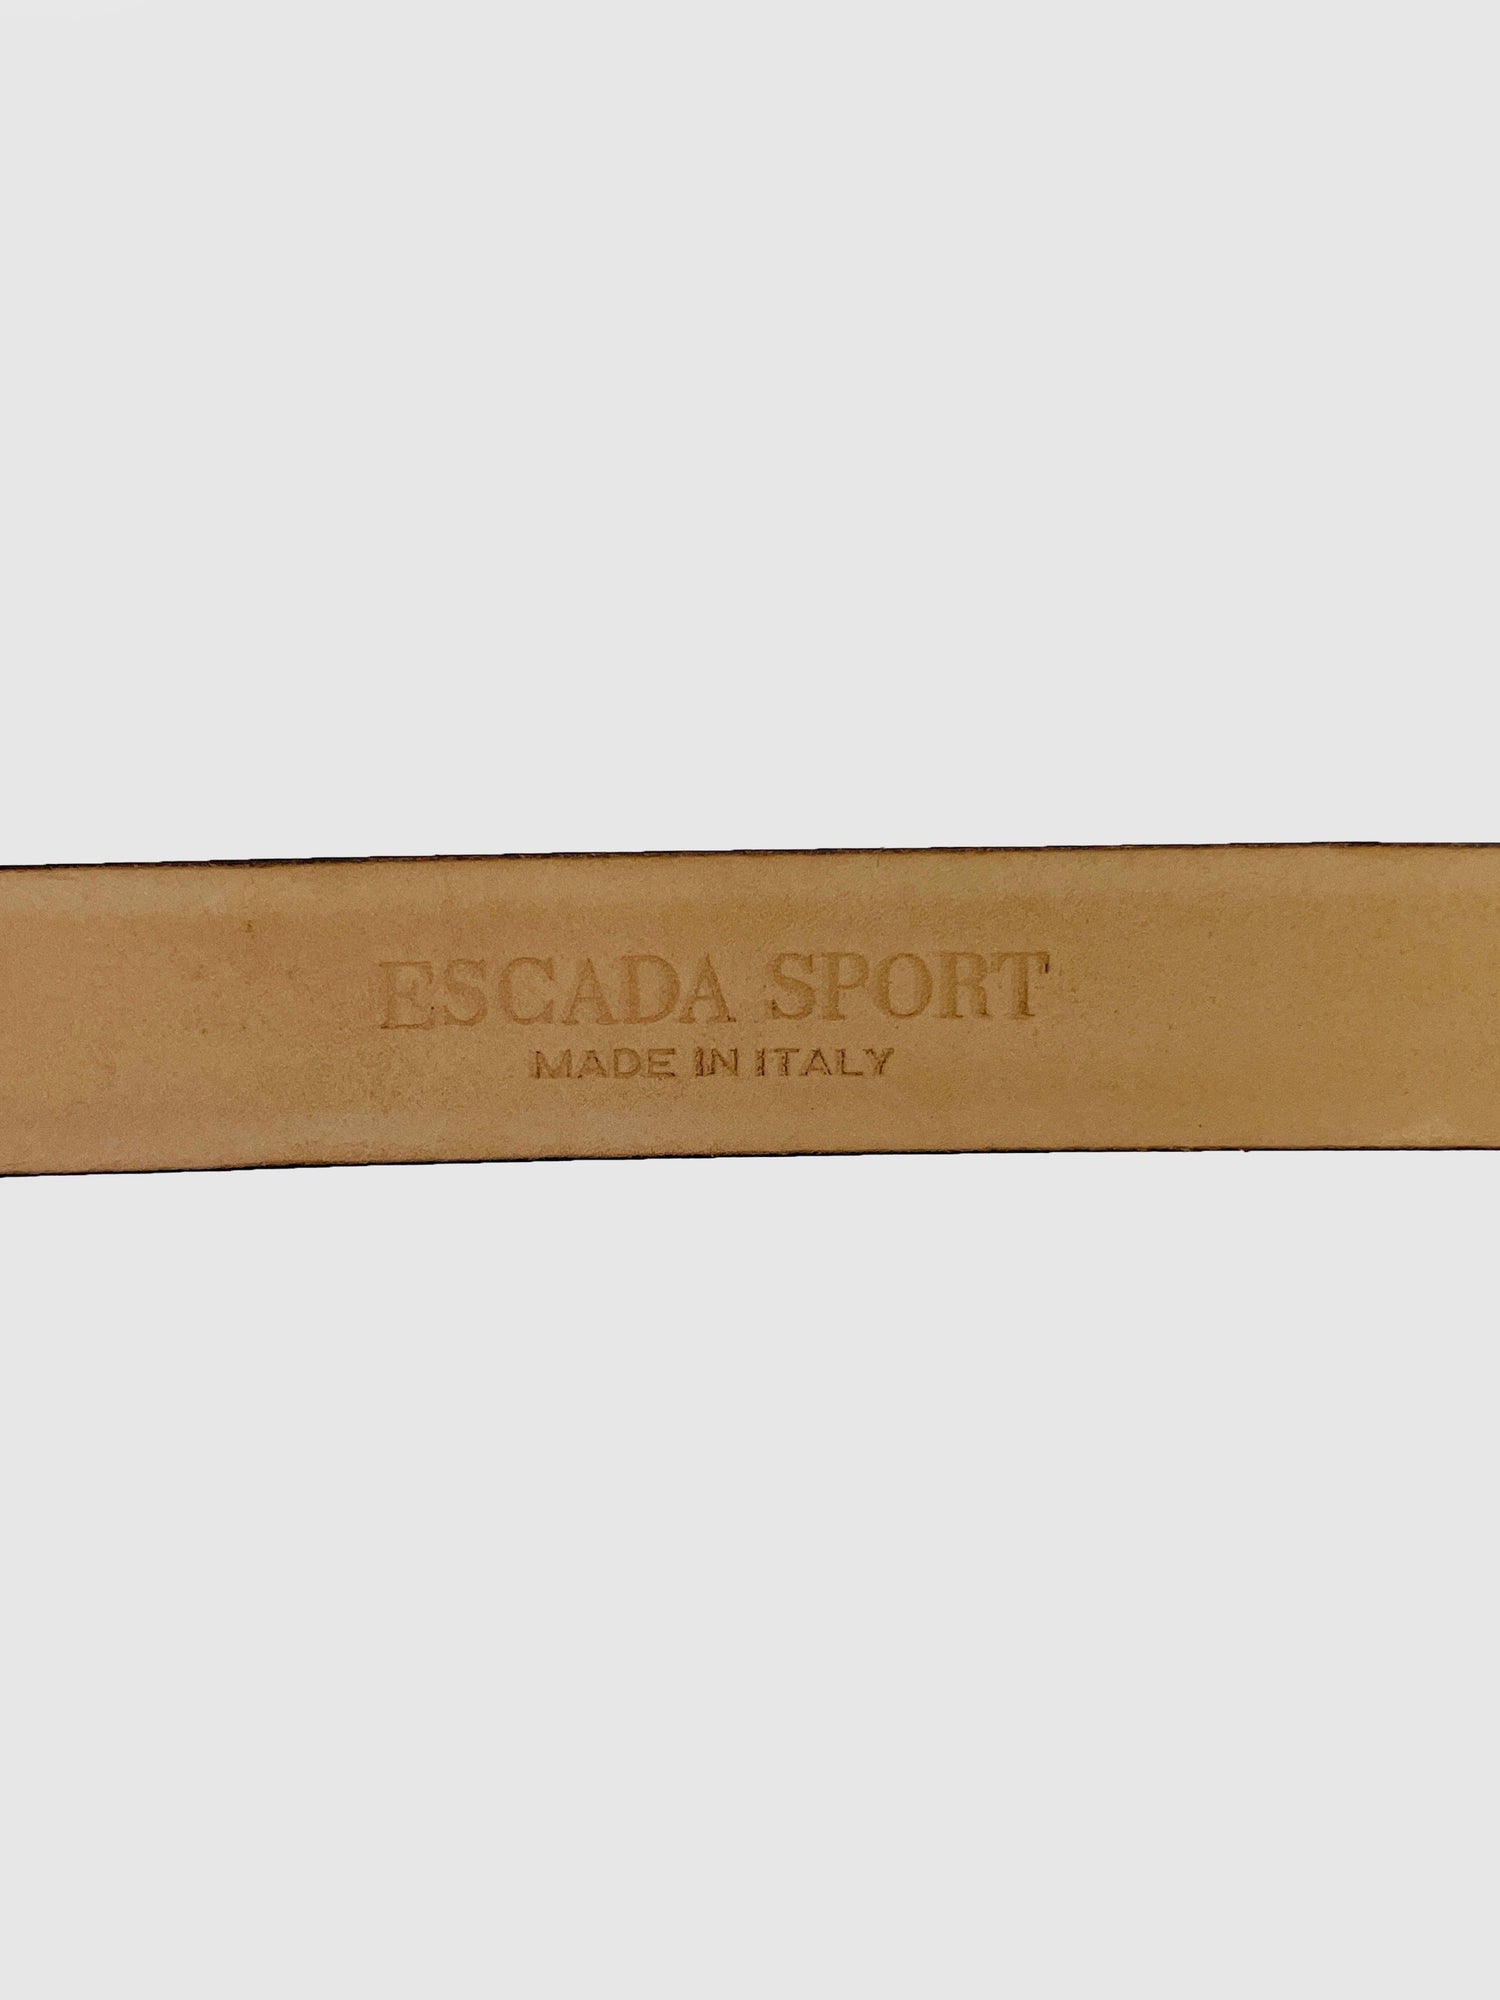 Escada Sport - Second Nature Boutique